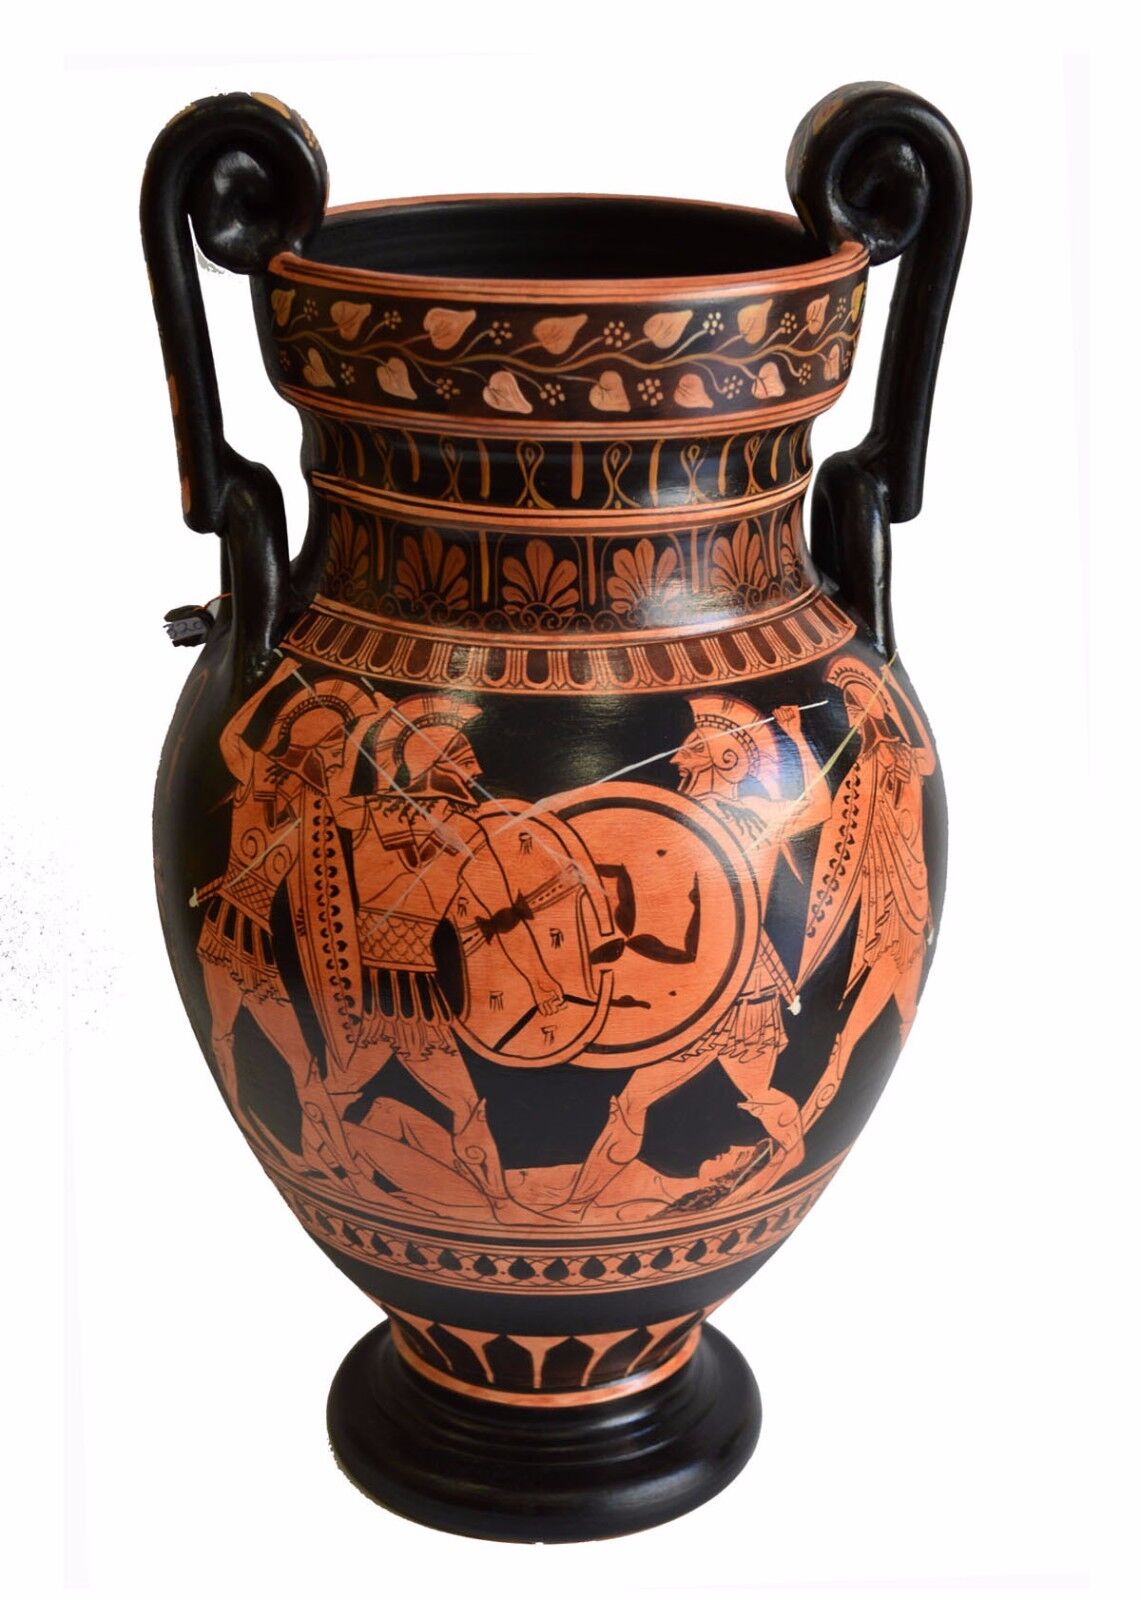 Achilles Hector Menelaos Paris -Trojan War Theme - Red Figure Volute Krater Vase